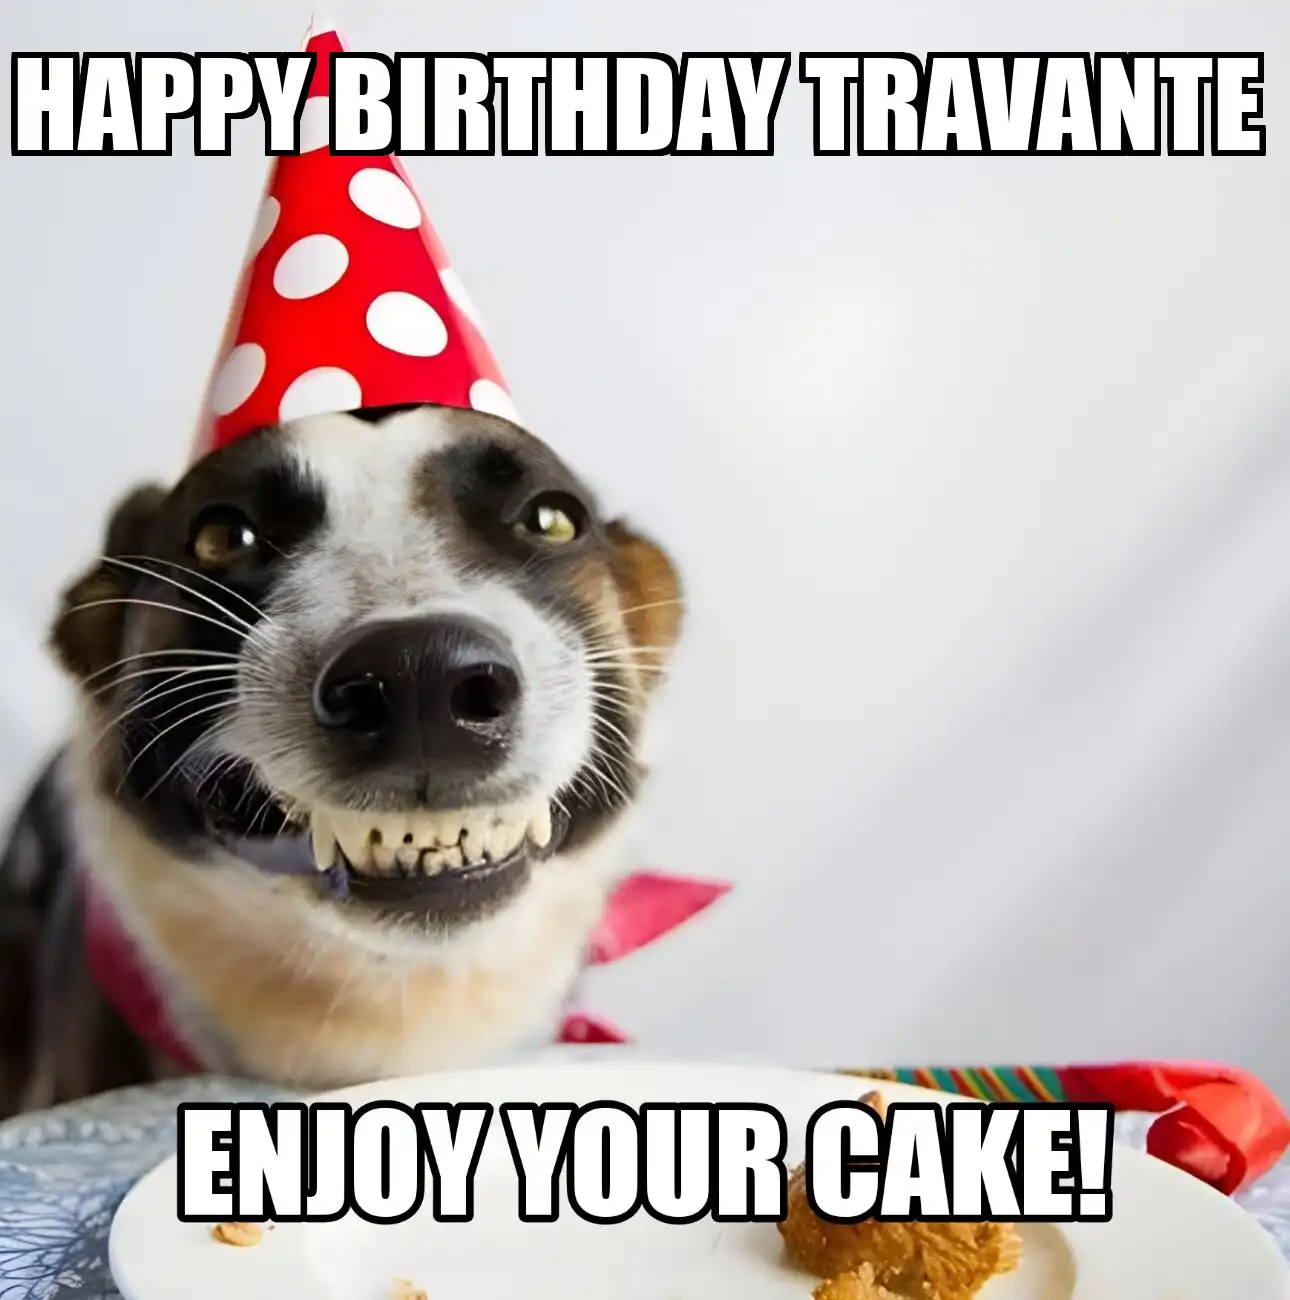 Happy Birthday Travante Enjoy Your Cake Dog Meme